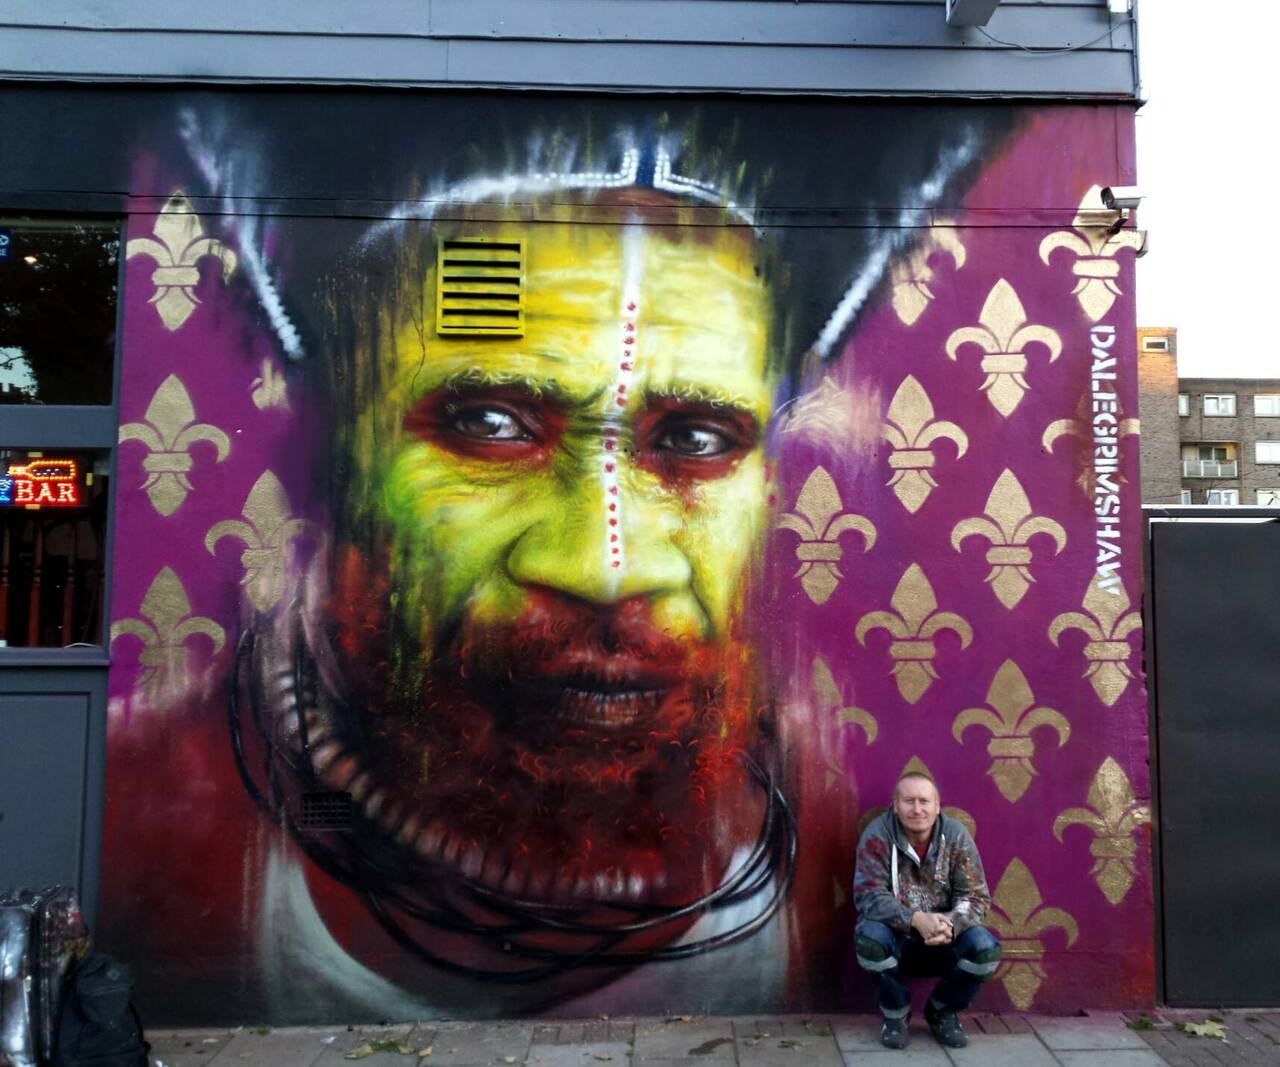 Dale Grimshaw creates a new piece in Mornington Crescent, London. #StreetArt #Graffiti #Mural http://t.co/zfxM8H9hTY